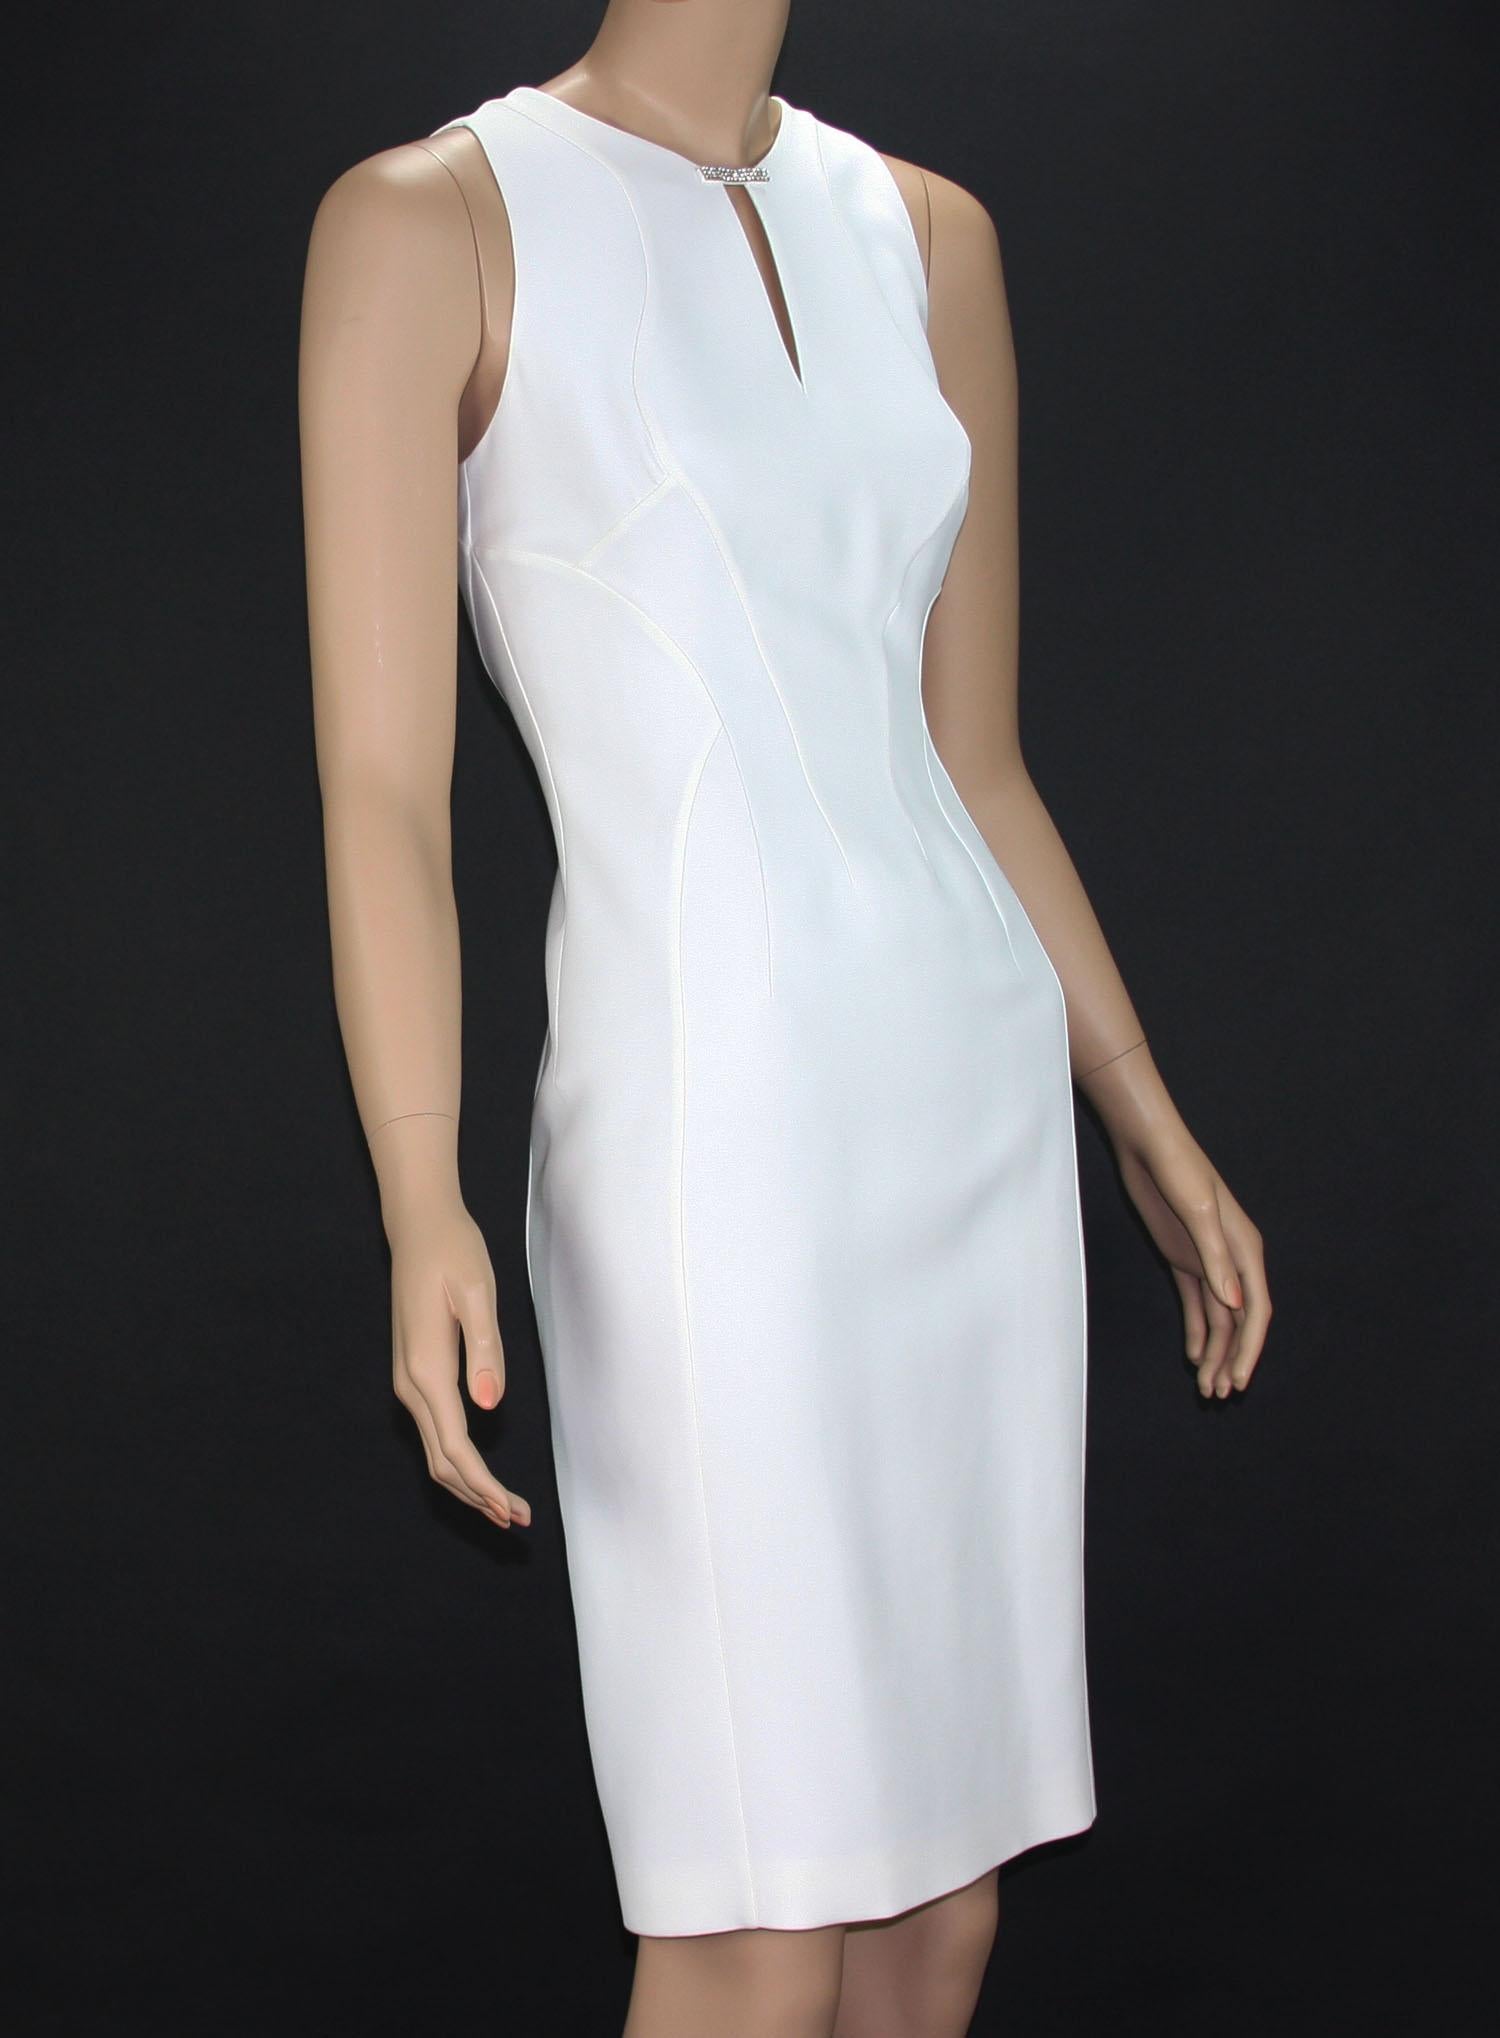 New Versace Elegant White Cocktail Dress 
Designer size 40 - US 6
100% Silk, Swarovski Crystals Detail, Fully Lined, Back Zip Closure.
Measurements: Length - 39 inches, Bust - 34